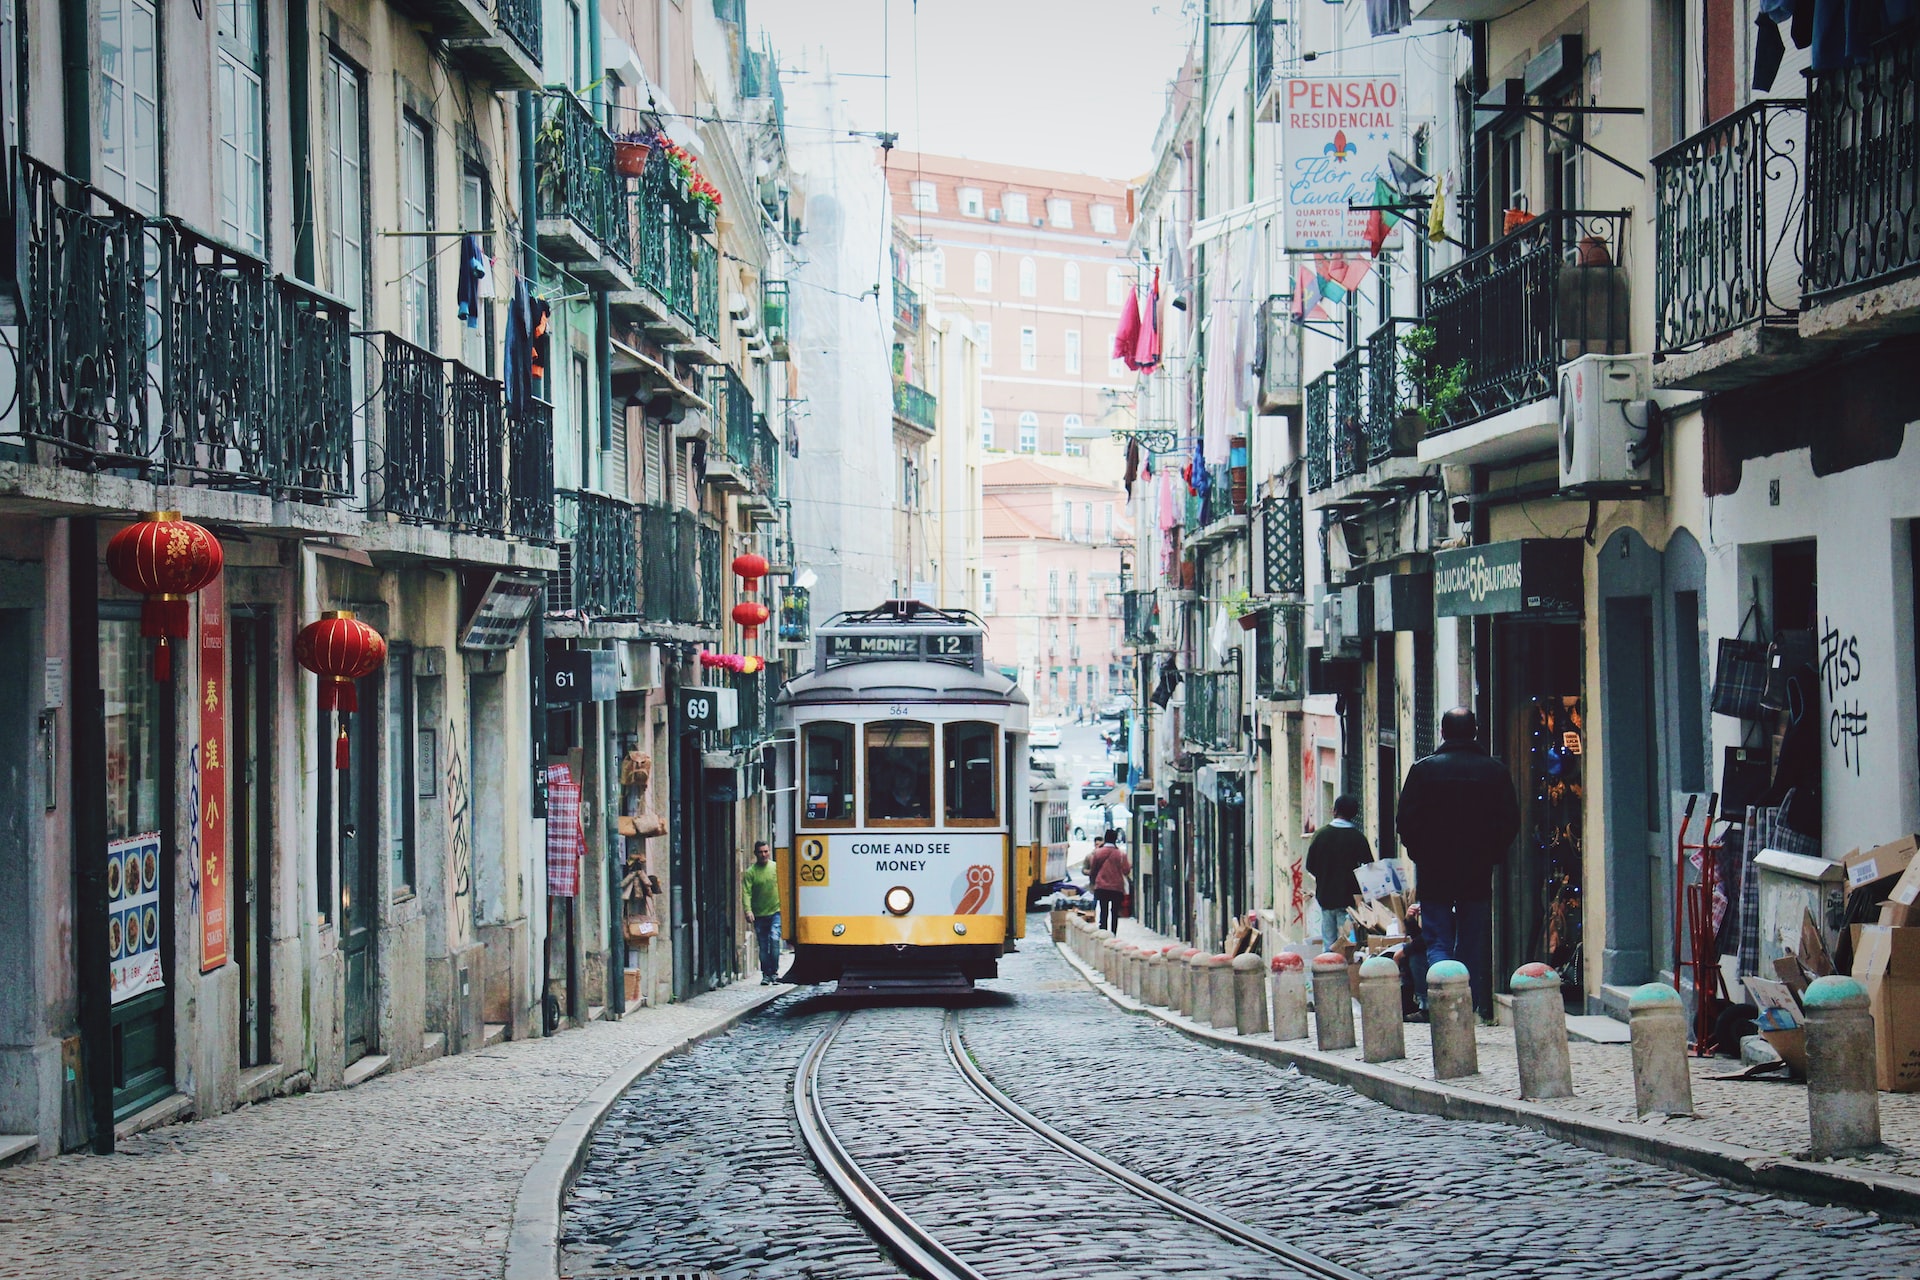 Tram in Lisbon, Portugal